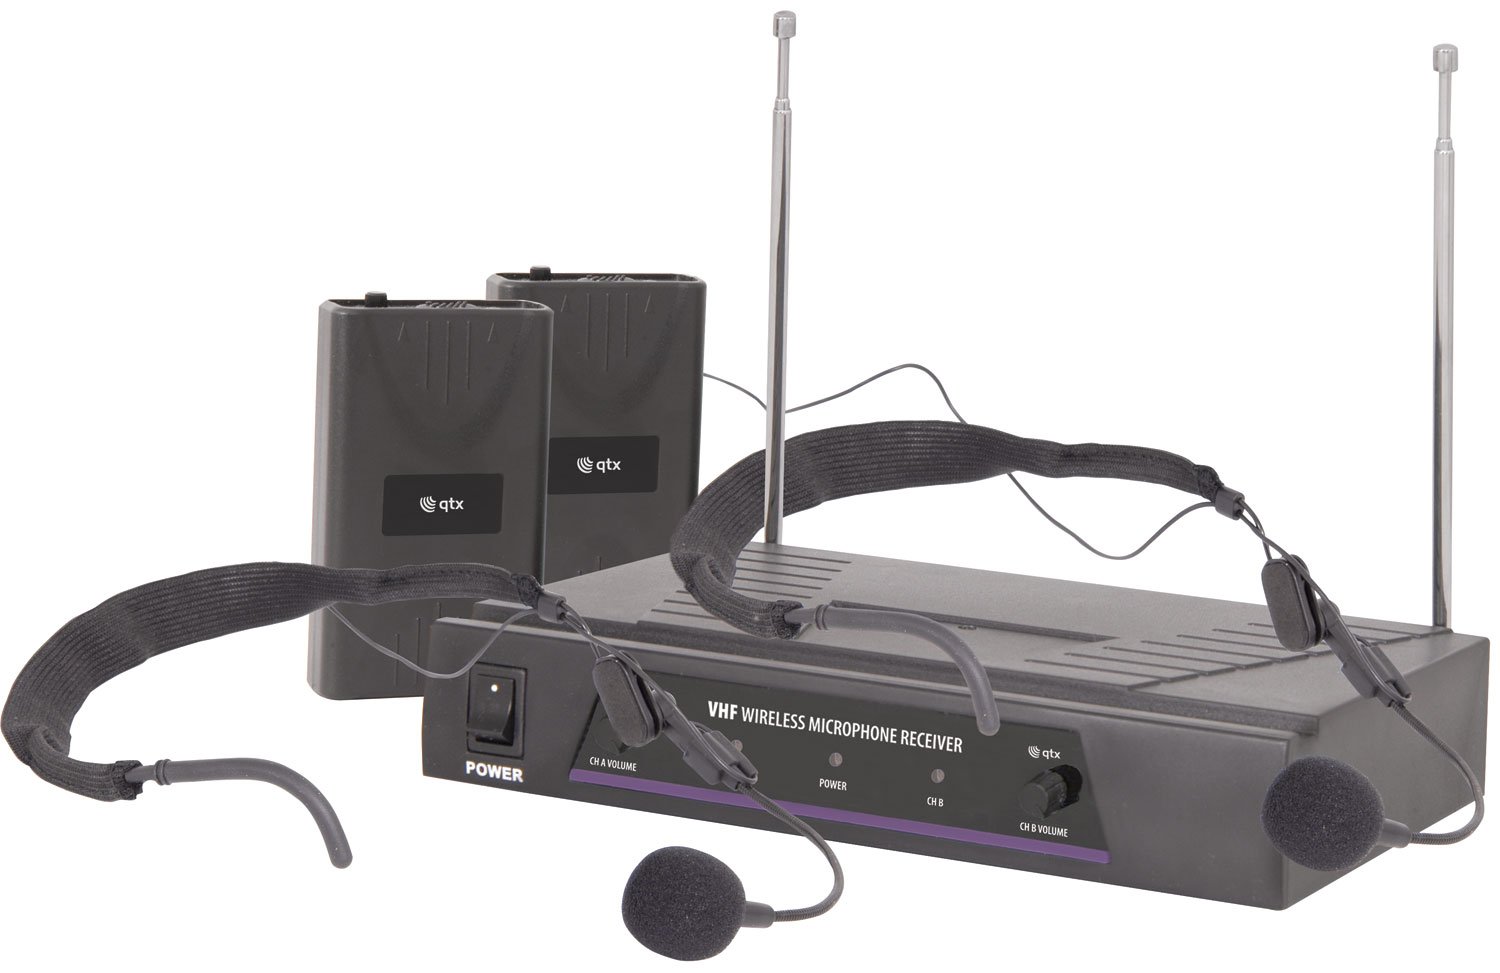 Dual Neckband Microphone VHF Wireless System VHF dual neckband wireless system - 174.1 + 175.0MHz